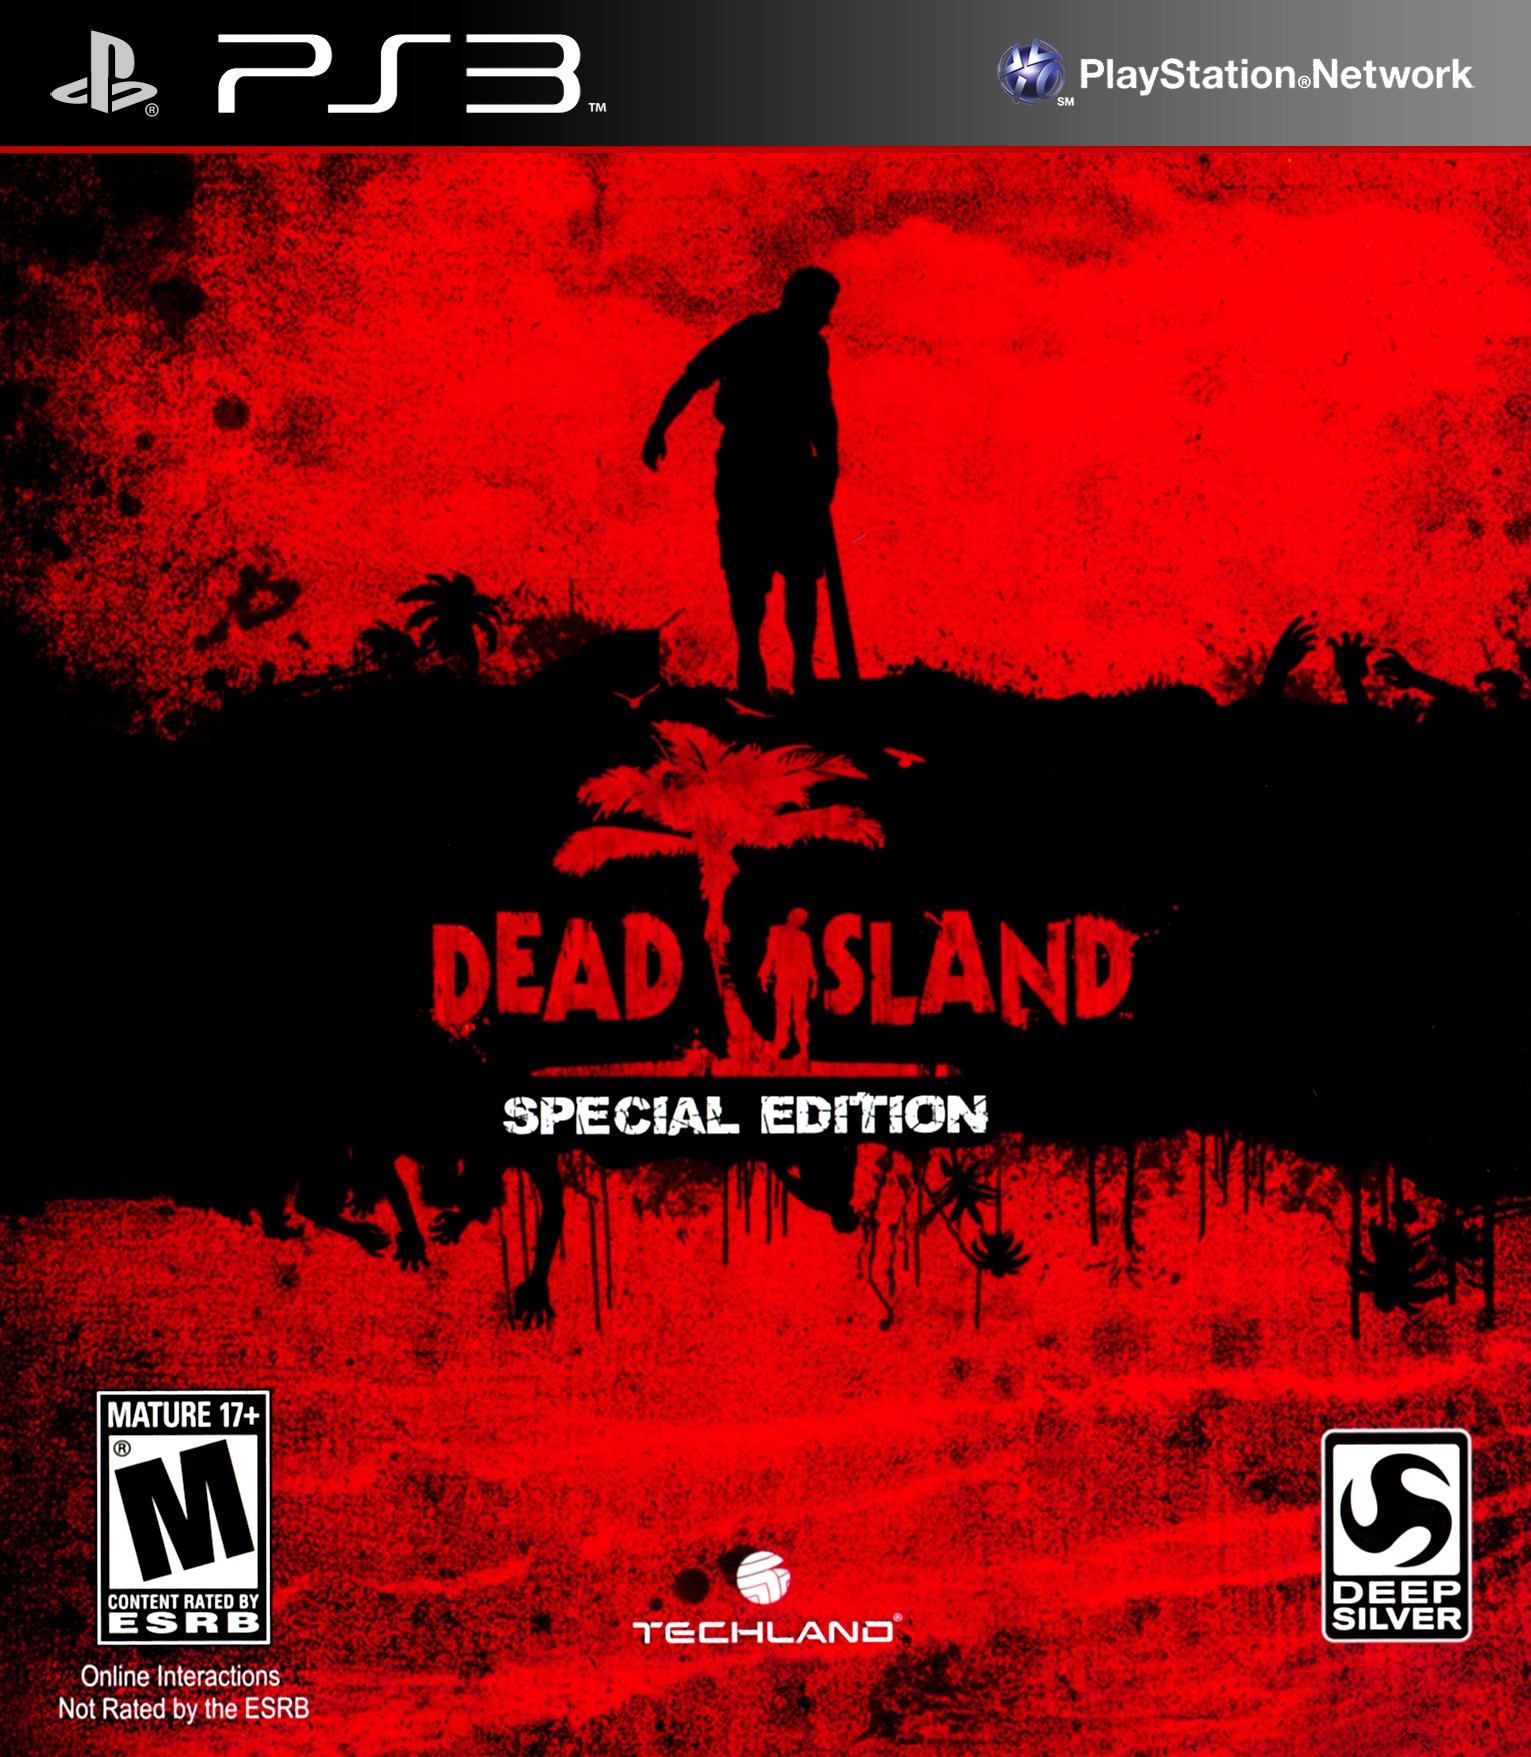 'Dead Island - special edition'